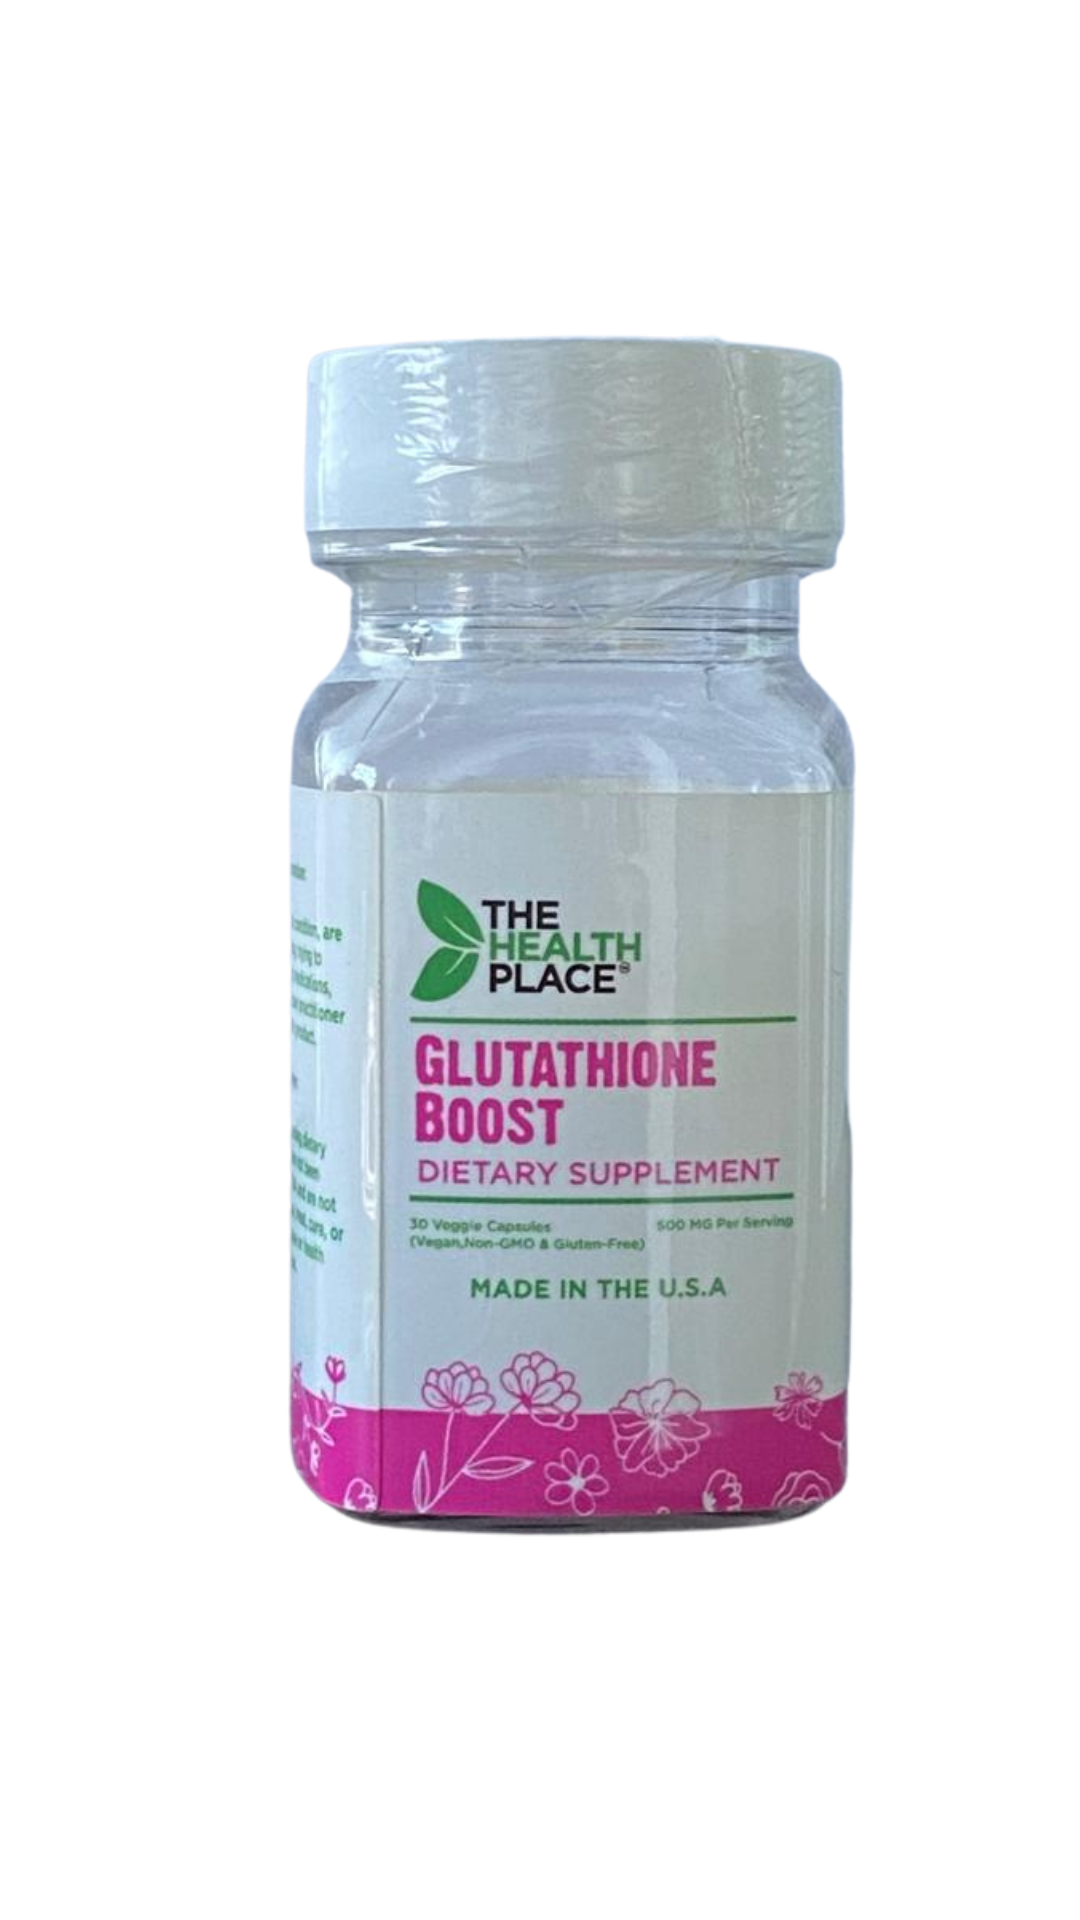 Glutathione Boost - 30 Capsules 650mg each *REFILL PLEASE READ